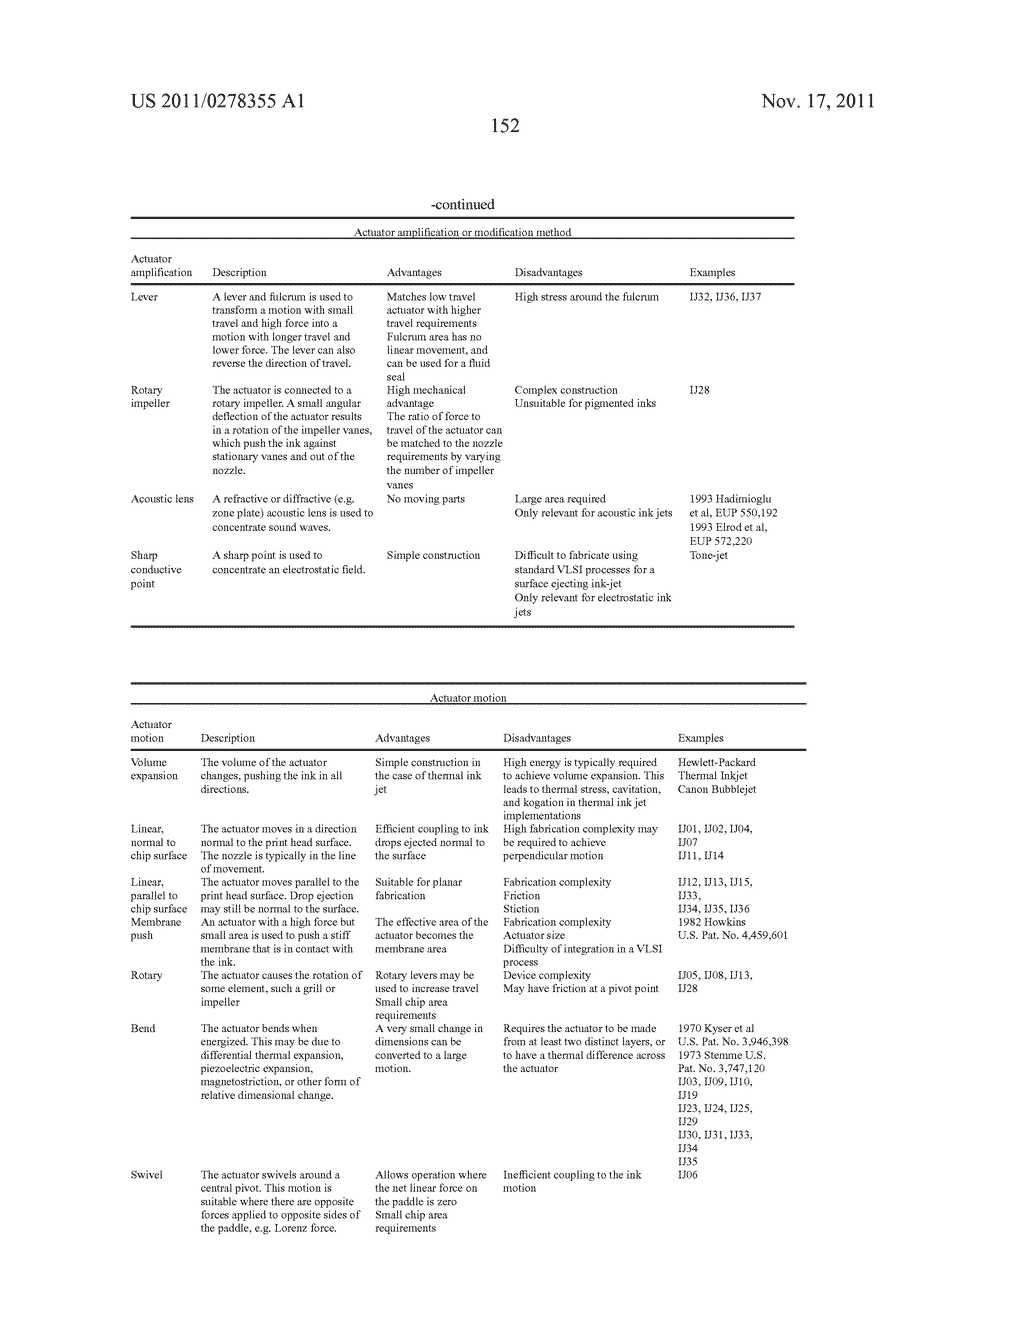 CAMERA UNIT INCOPORATING PROGRAM SCRIPT SCANNER - diagram, schematic, and image 293